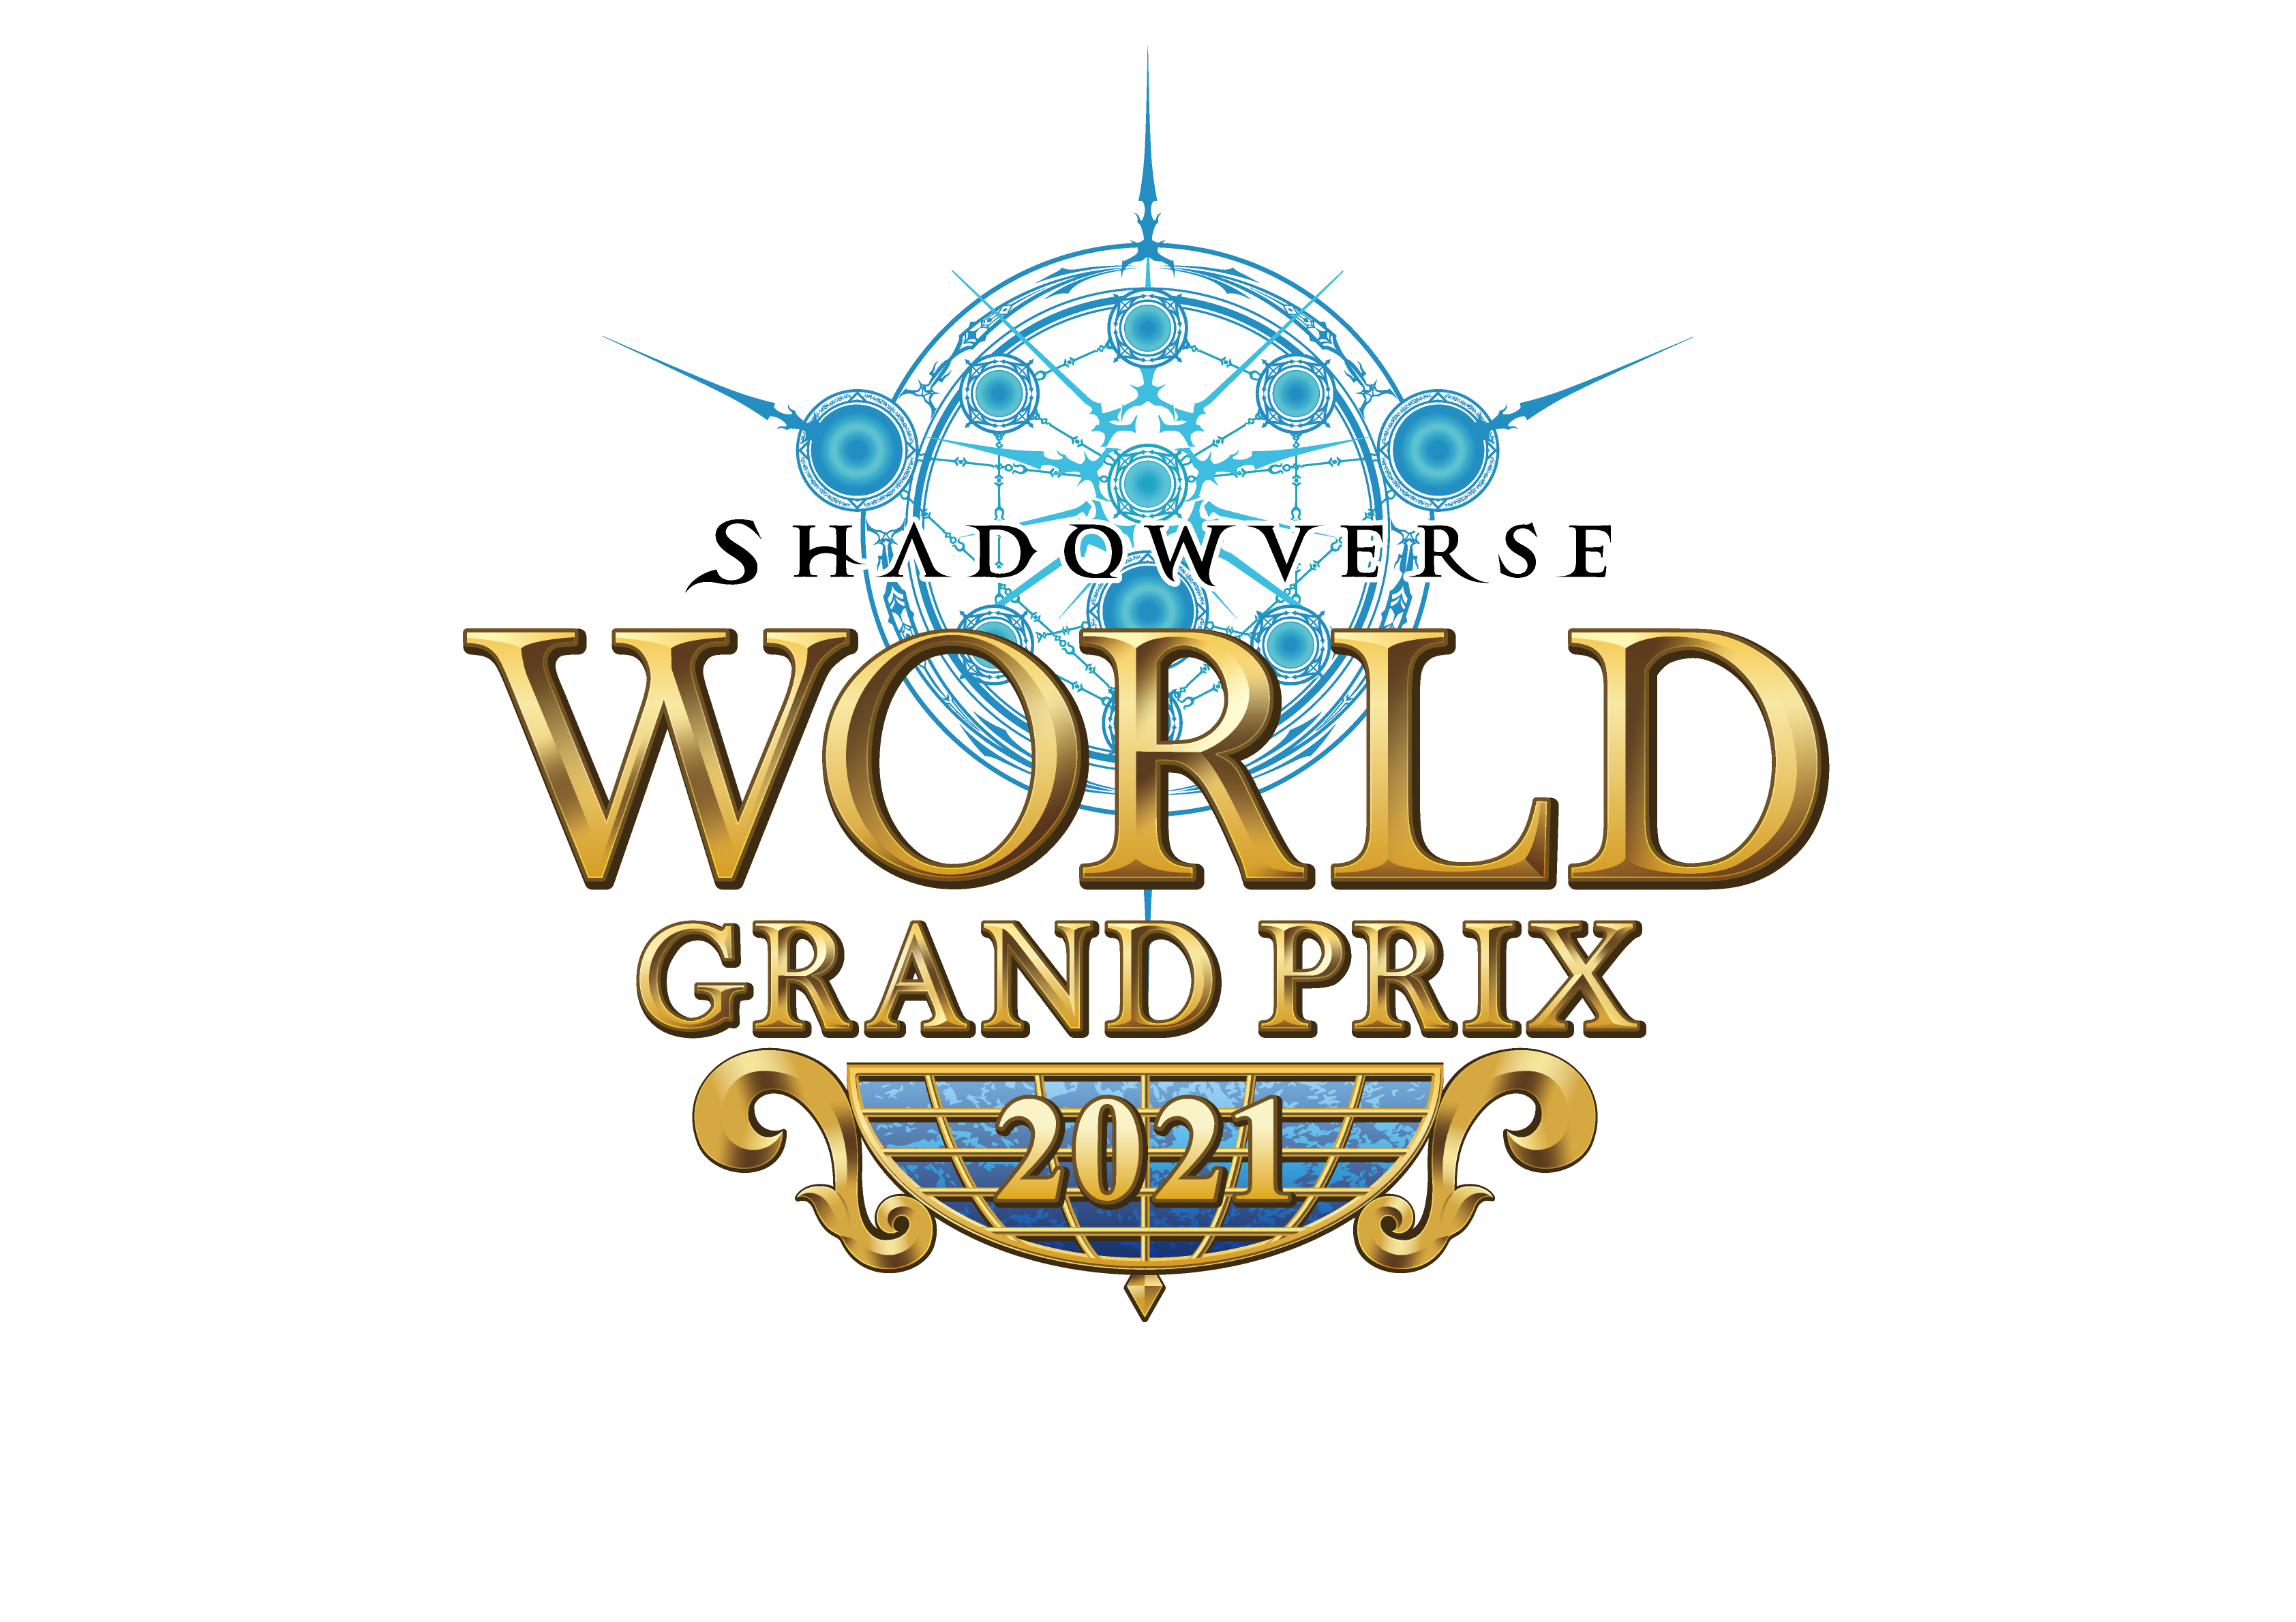 Shadowverse World Grand Prix 2021